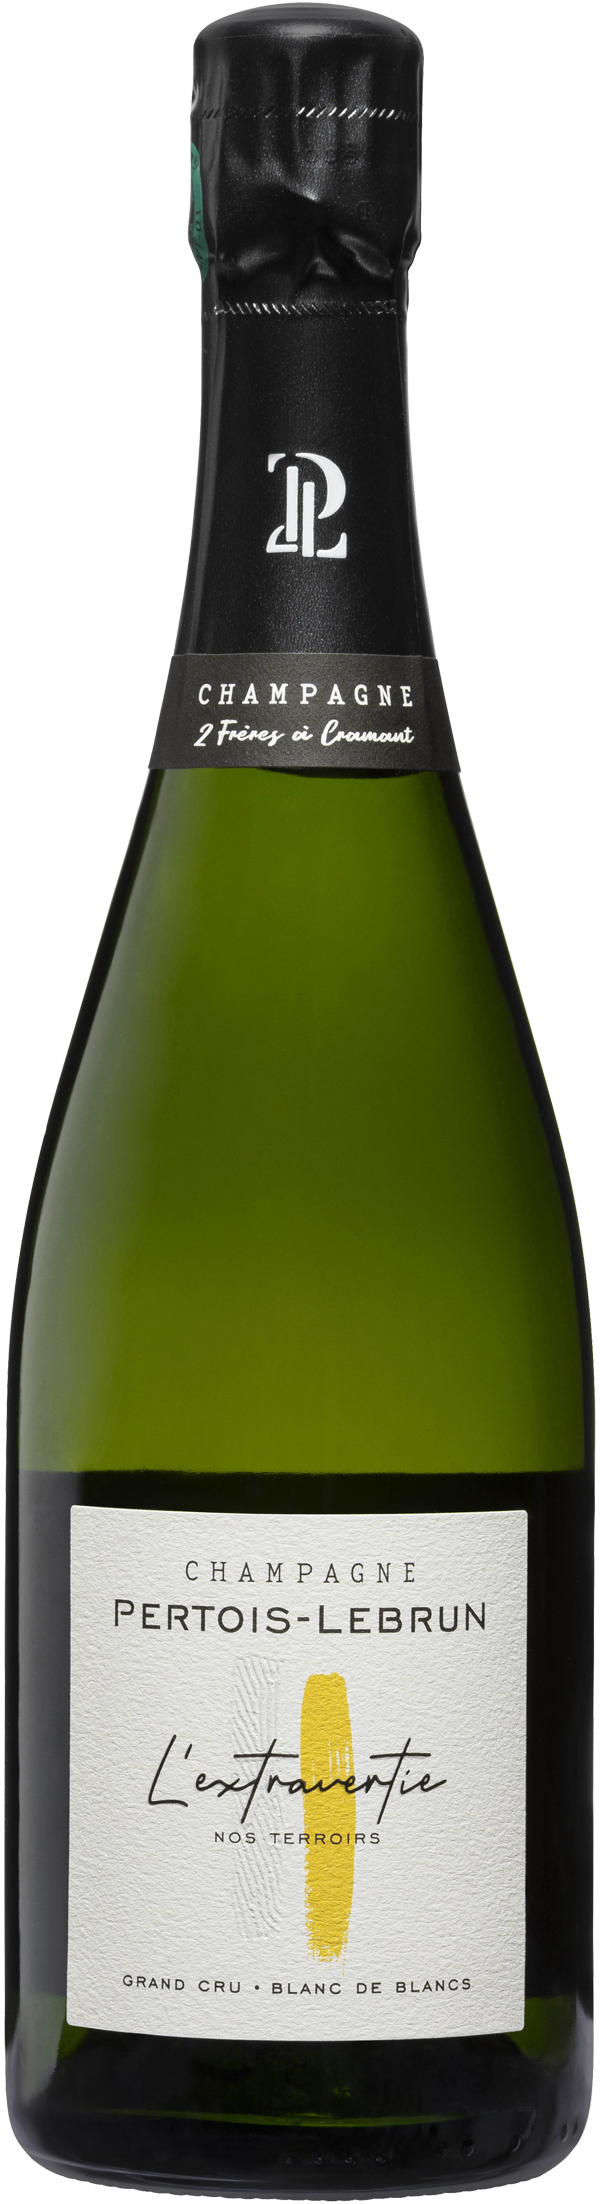 Champagne Pertois Lebrun - L'Extravertie